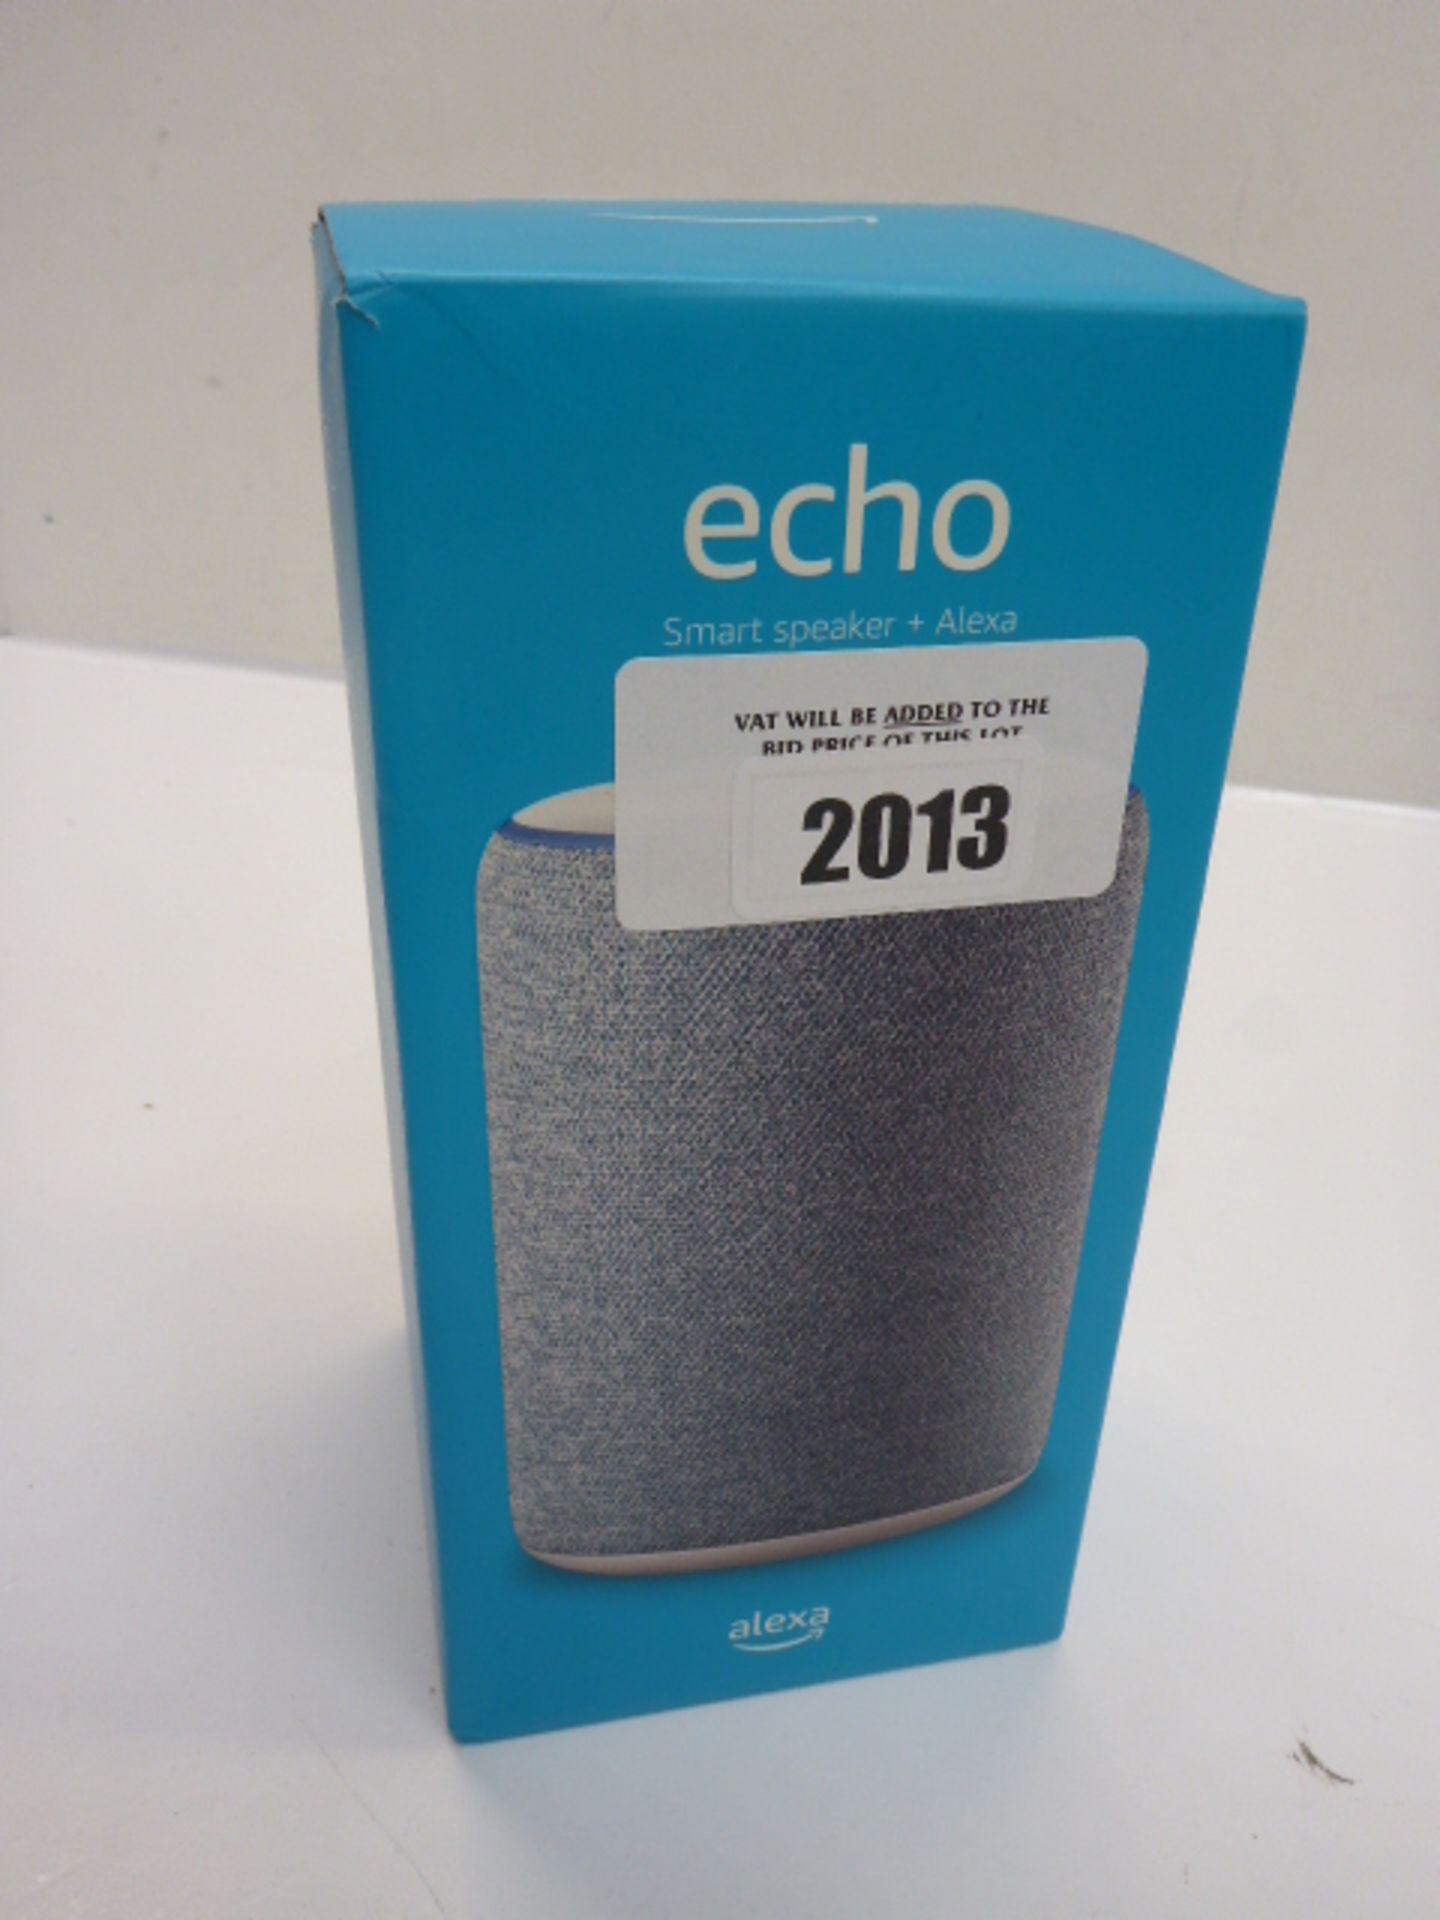 Amazon Echo Speaker 3rd Generation boxed.